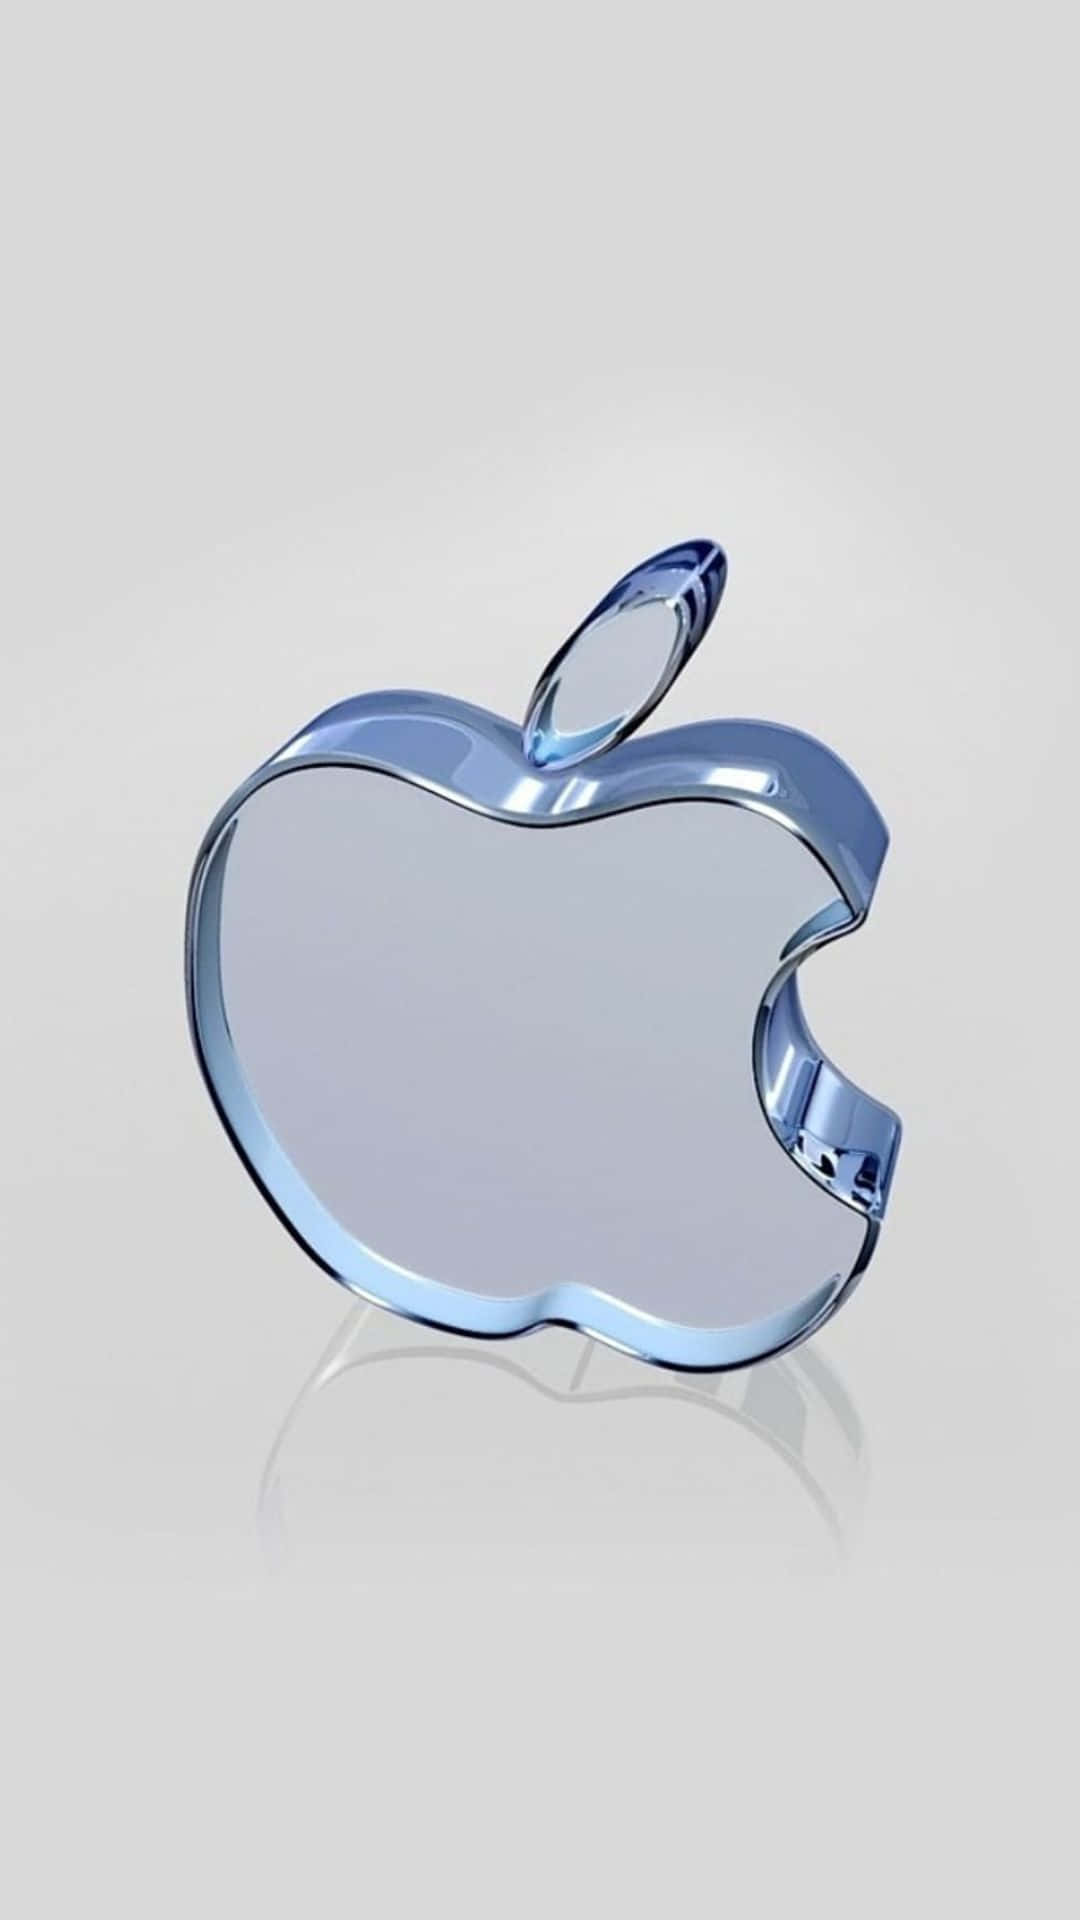 An Apple logo in 4k resolution Wallpaper